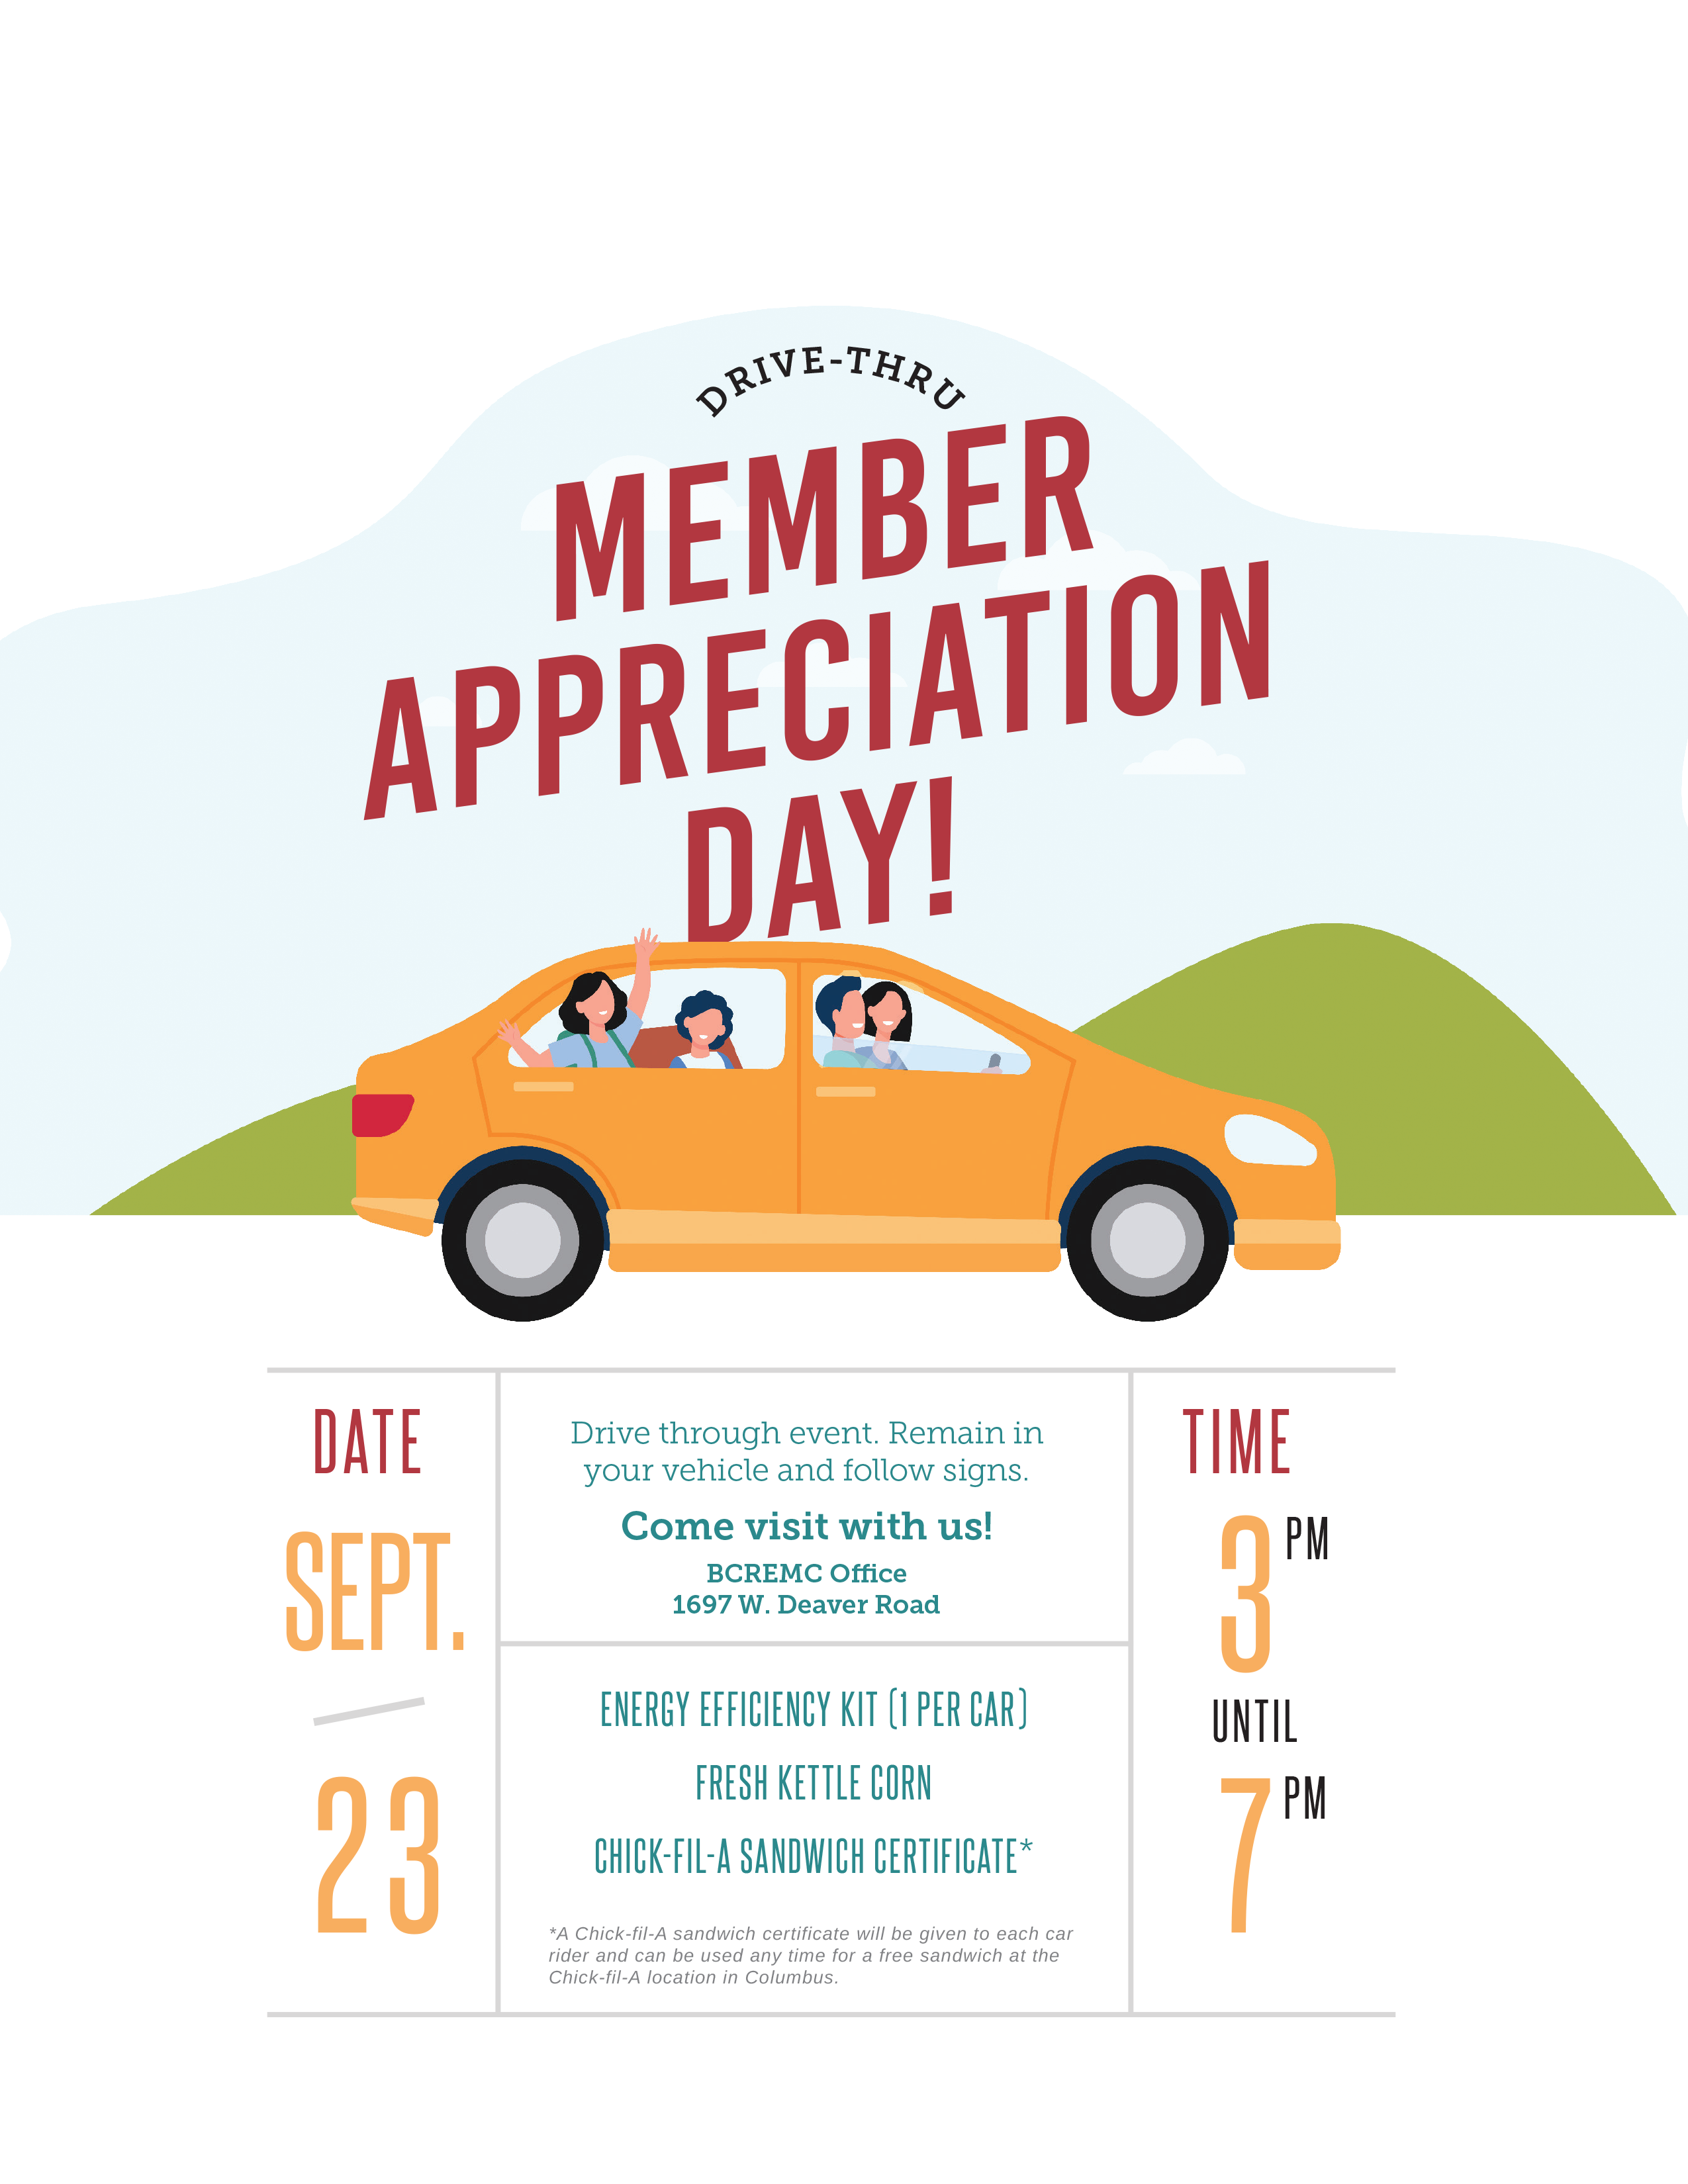 Member Appreciation Day ad